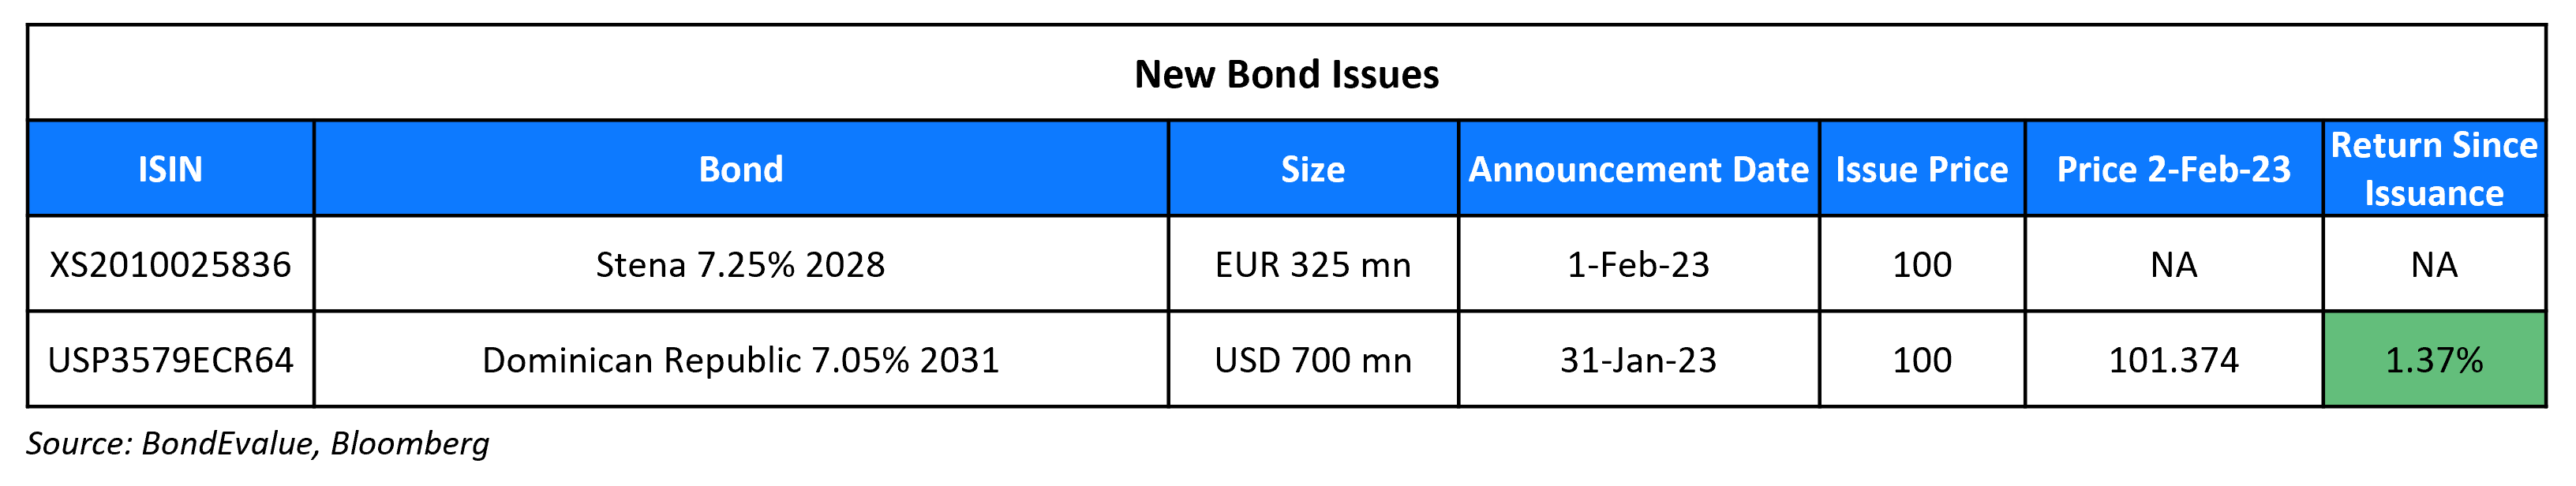 New Bond Issues 2 Feb 23